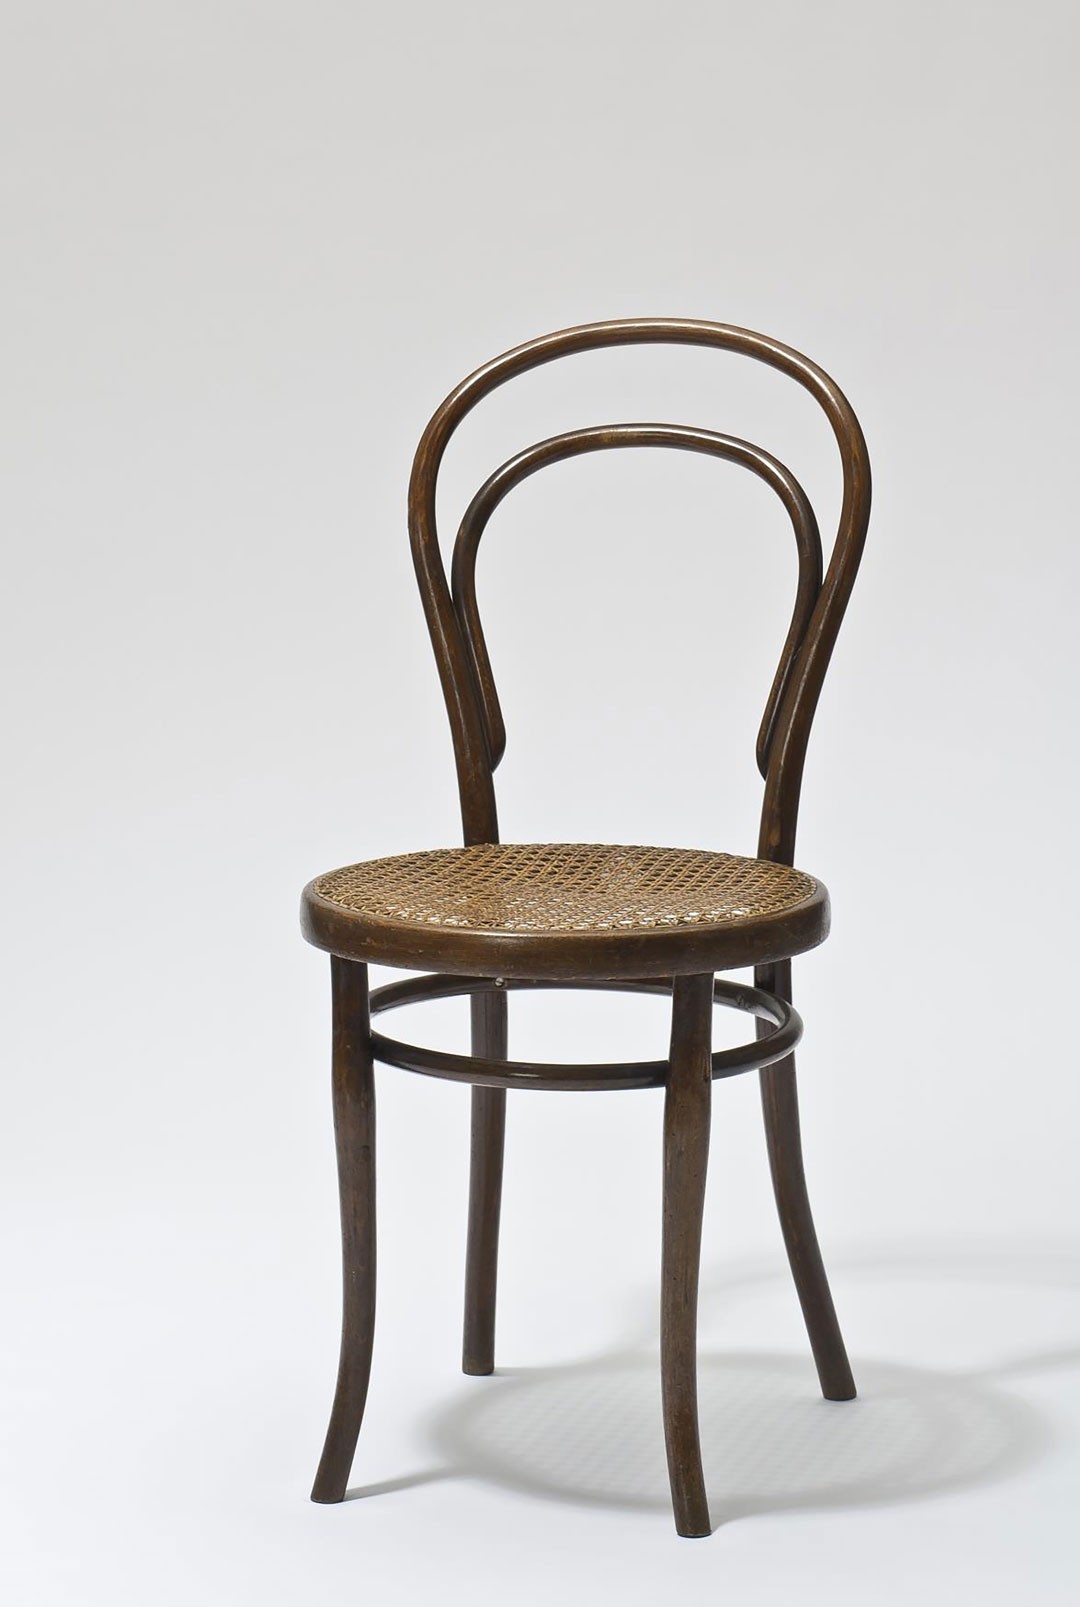 <BODY>Gebrüder Thonet, Chair, Model N0. 14, Vienna, 1859 (Execution: 1890–1918)<br />© MAK/Georg Mayer</BODY>